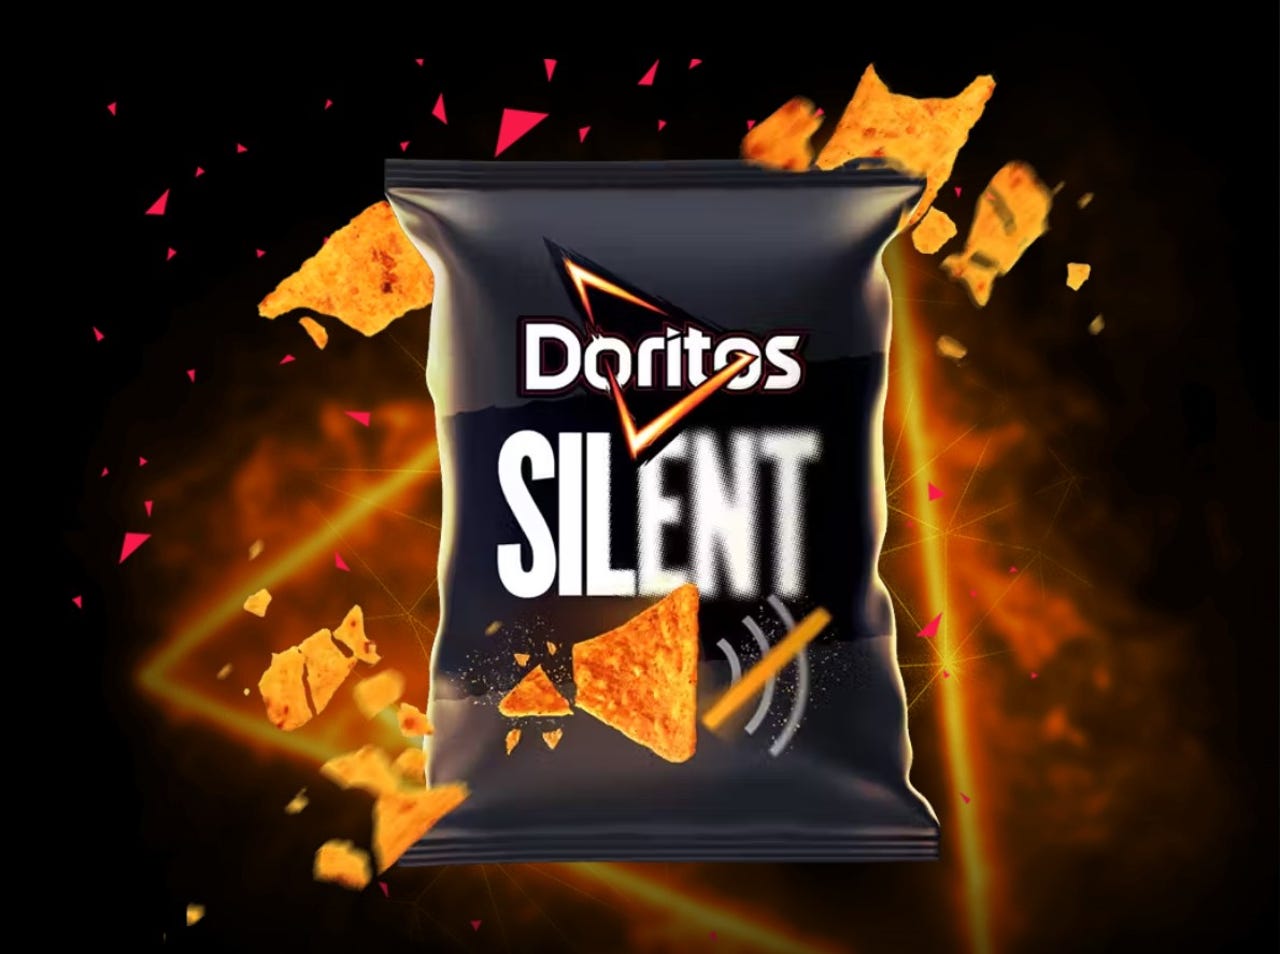 Doritos Silent app